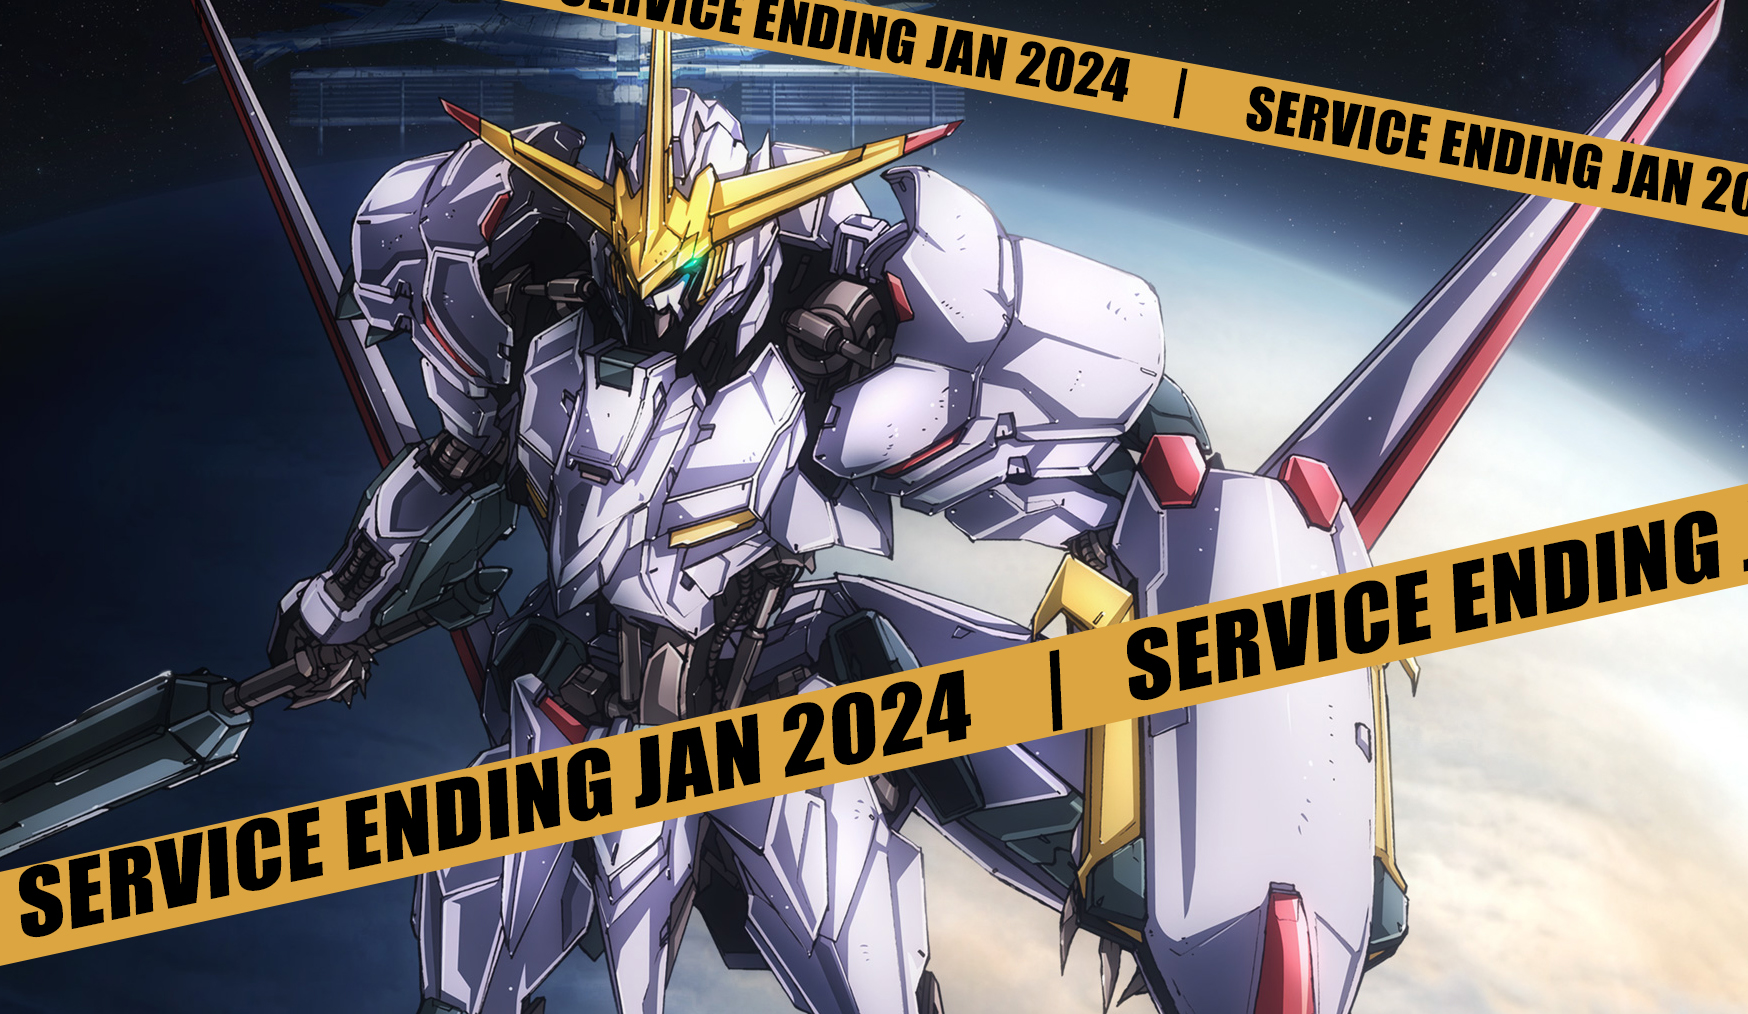 Gundam Evolution will be shut down in November 2023